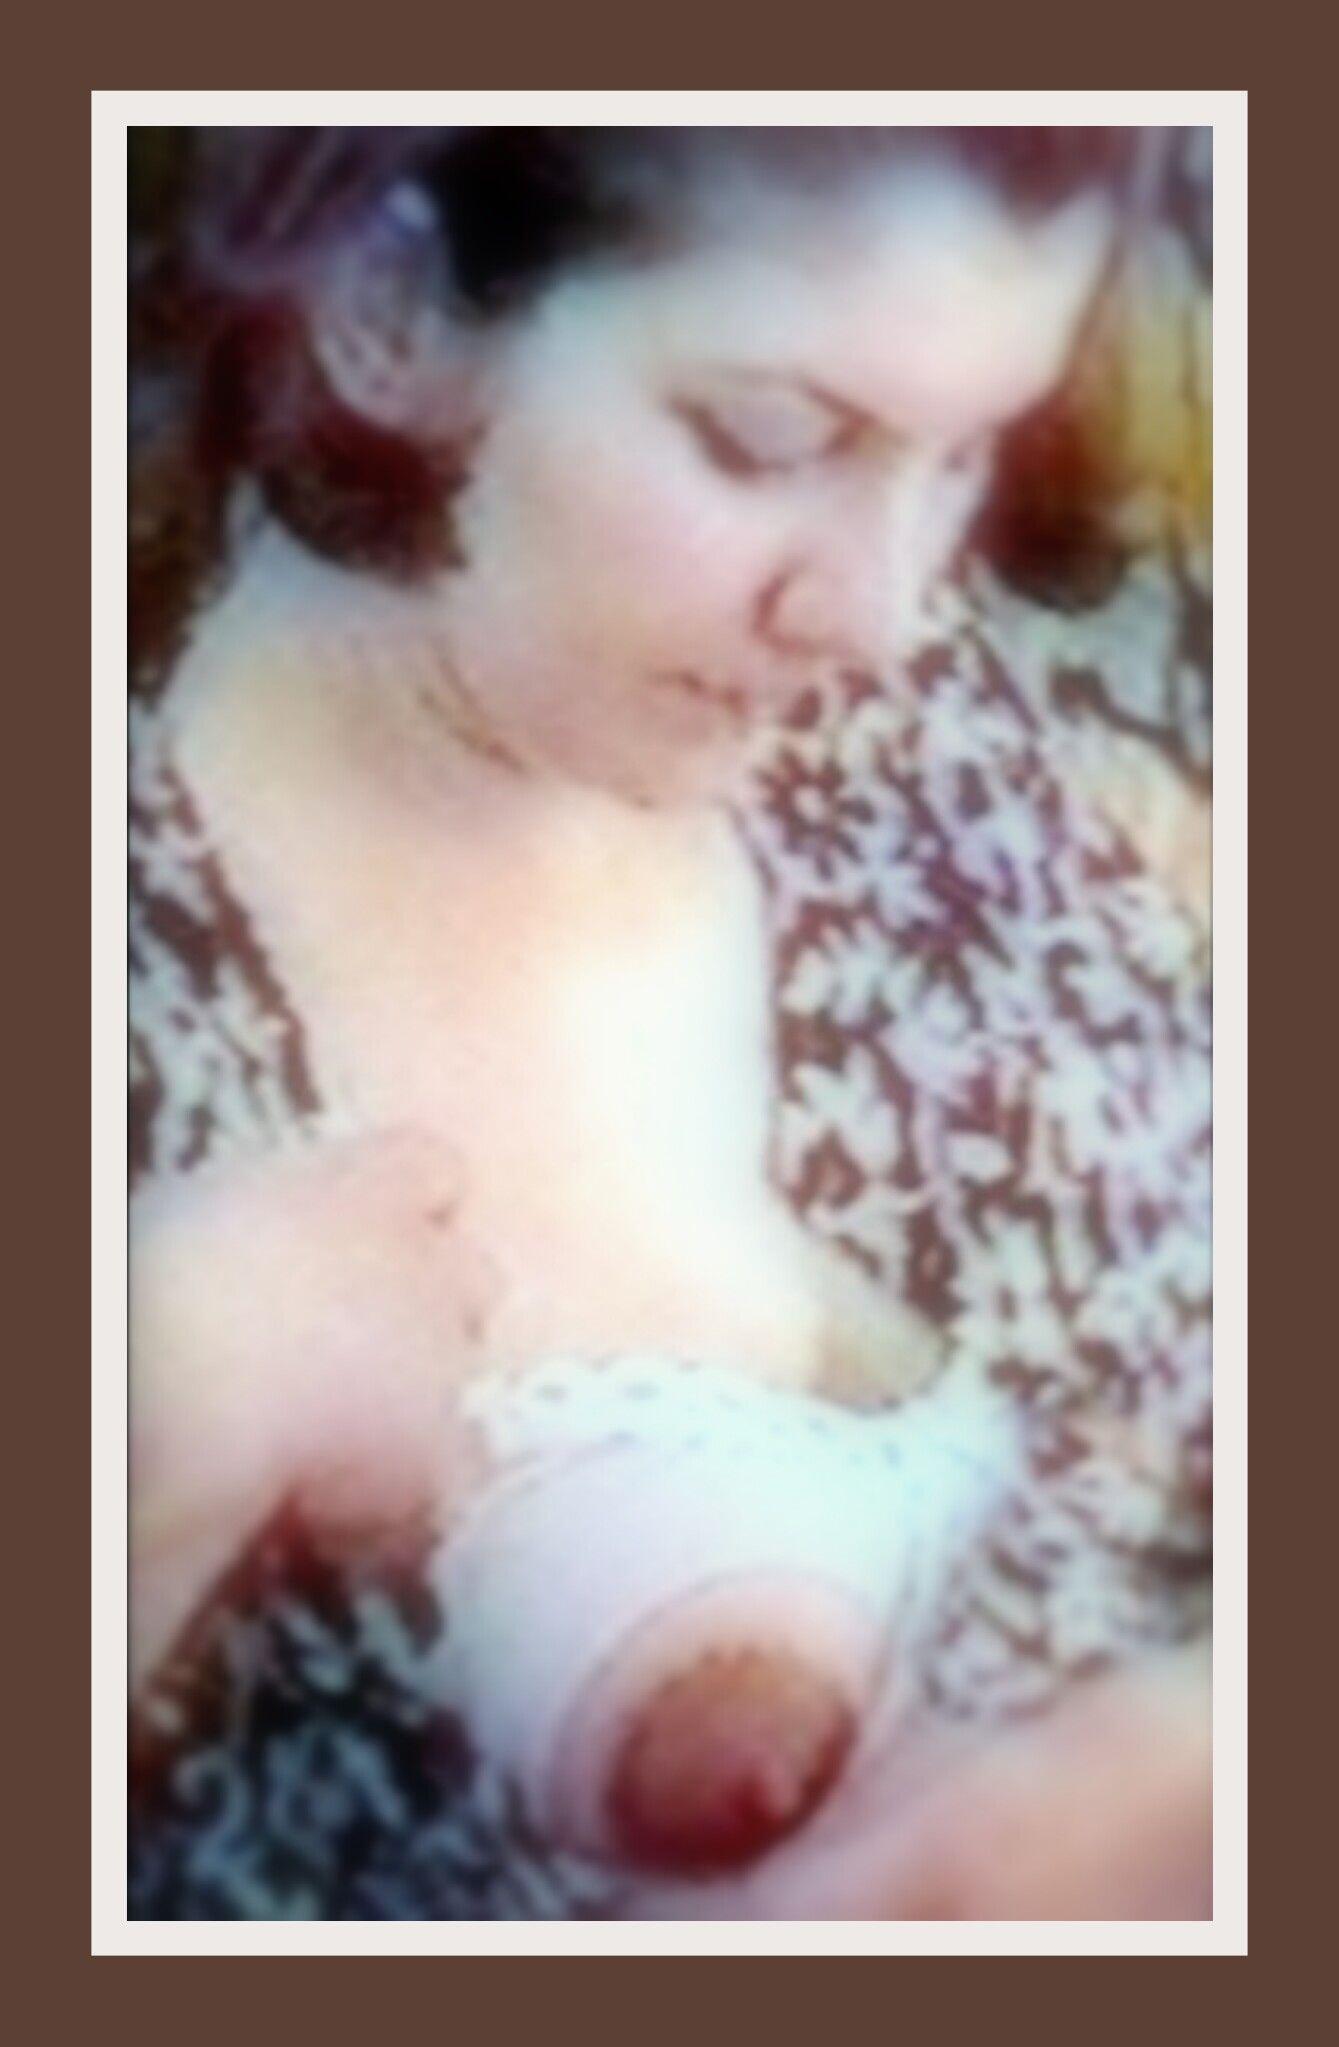 Real Amateurs  : #breast_milk #breastmilk #pink #suckable #notable #moments #memories #memory #lovely #born #newborn #milk #baby #breast #feeding #art #artwork #template #design #mom #mother #nipple #ashamed #vegan #perfectly #perfect #baby_nursery #nurse #enough #bigenner #nursery #areola #deepart #mama #Recreate #rt #retweet #toolwiz #Templates #nursing...